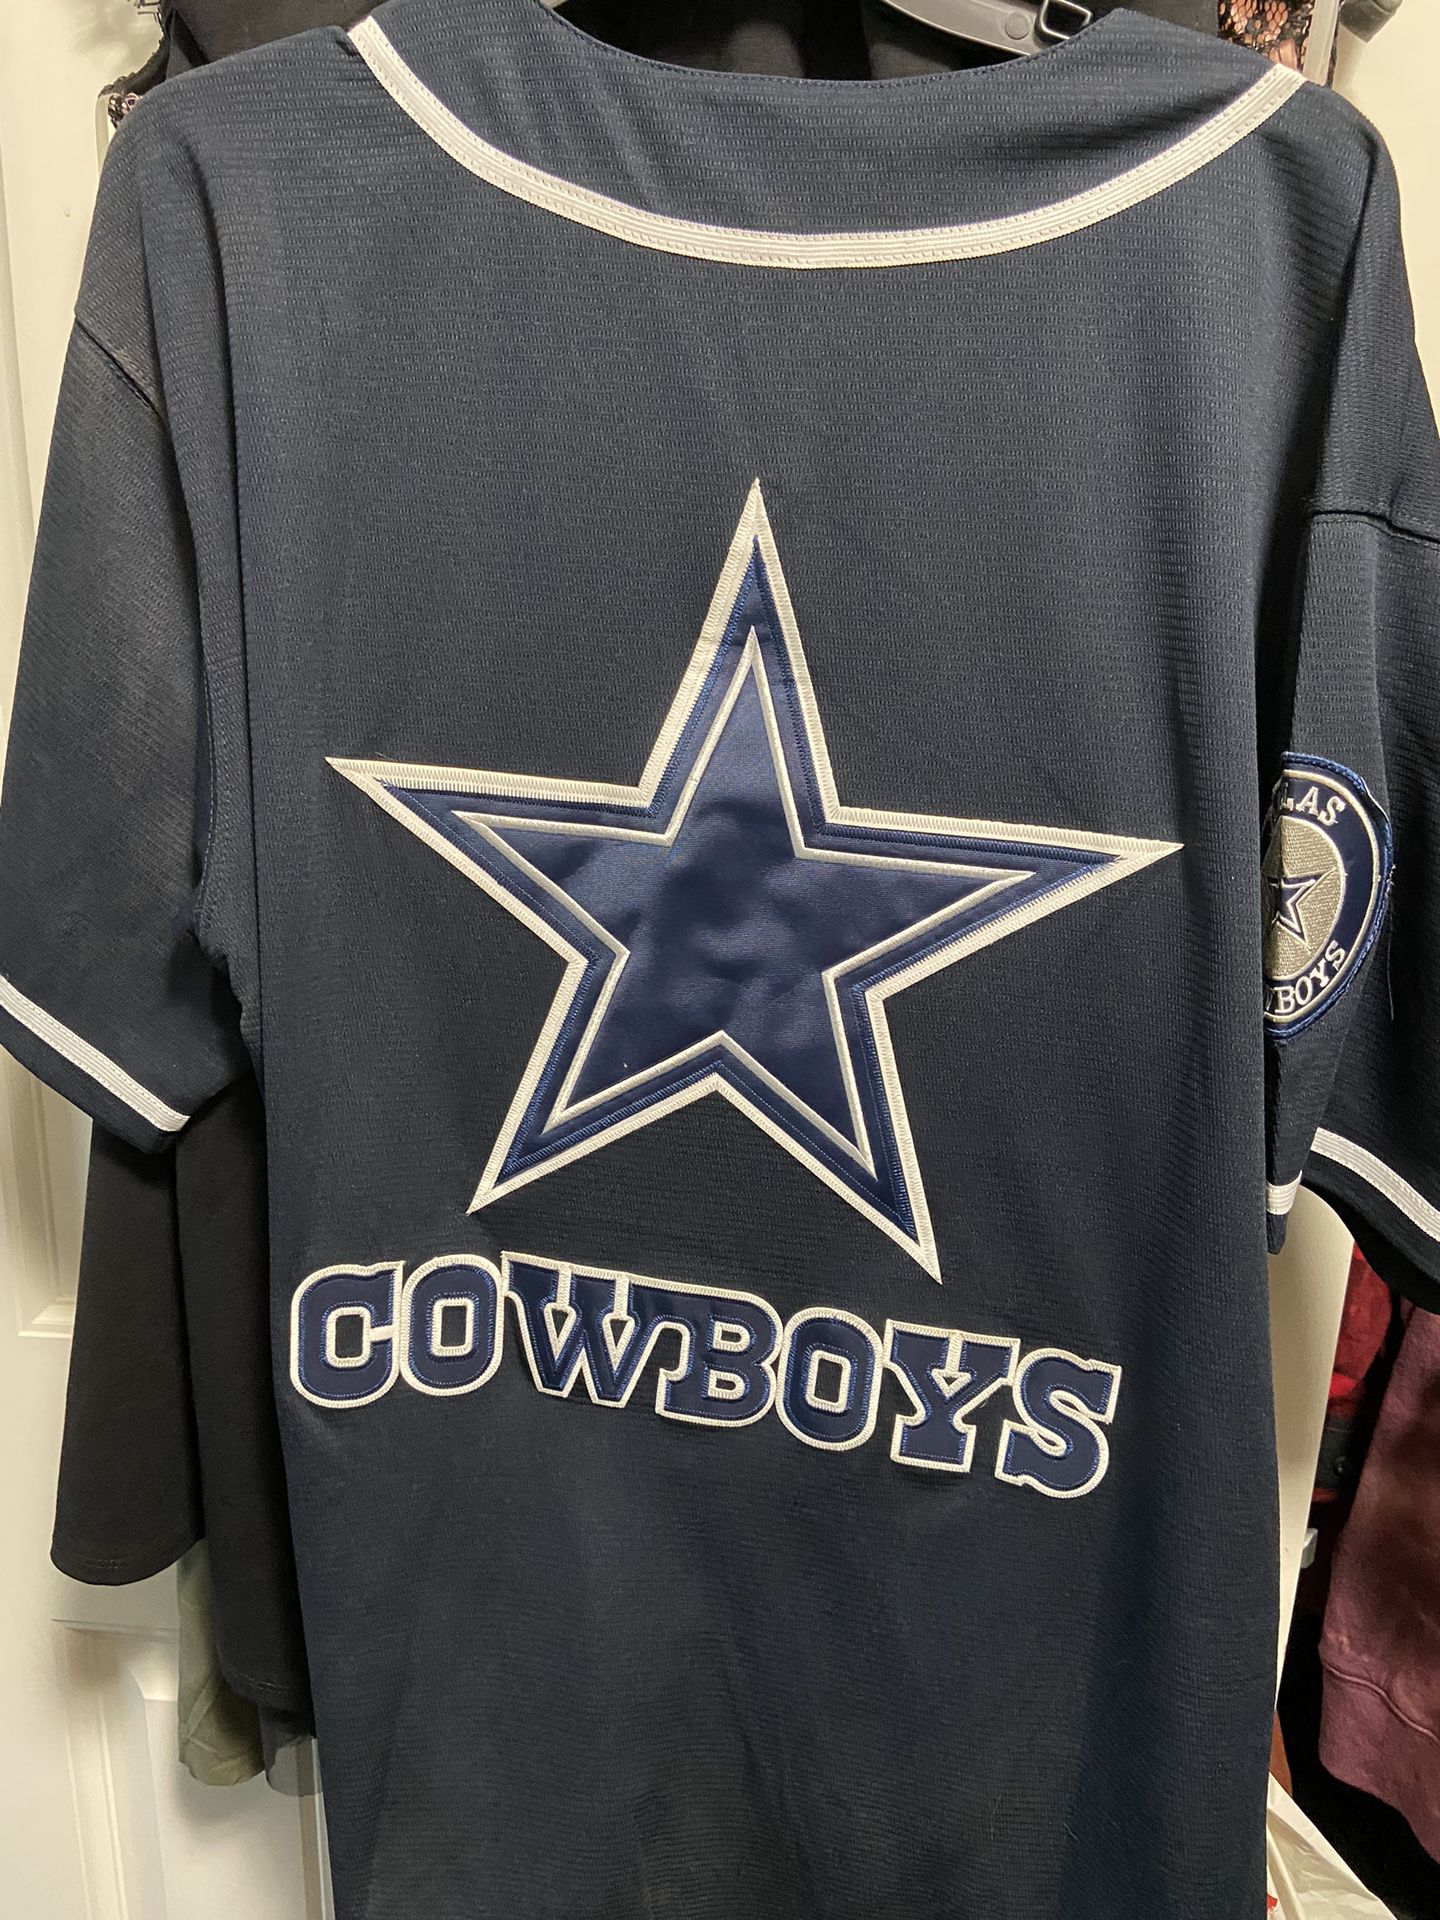 Dallas Cowboy Jersey Dress for Sale in El Paso, TX - OfferUp